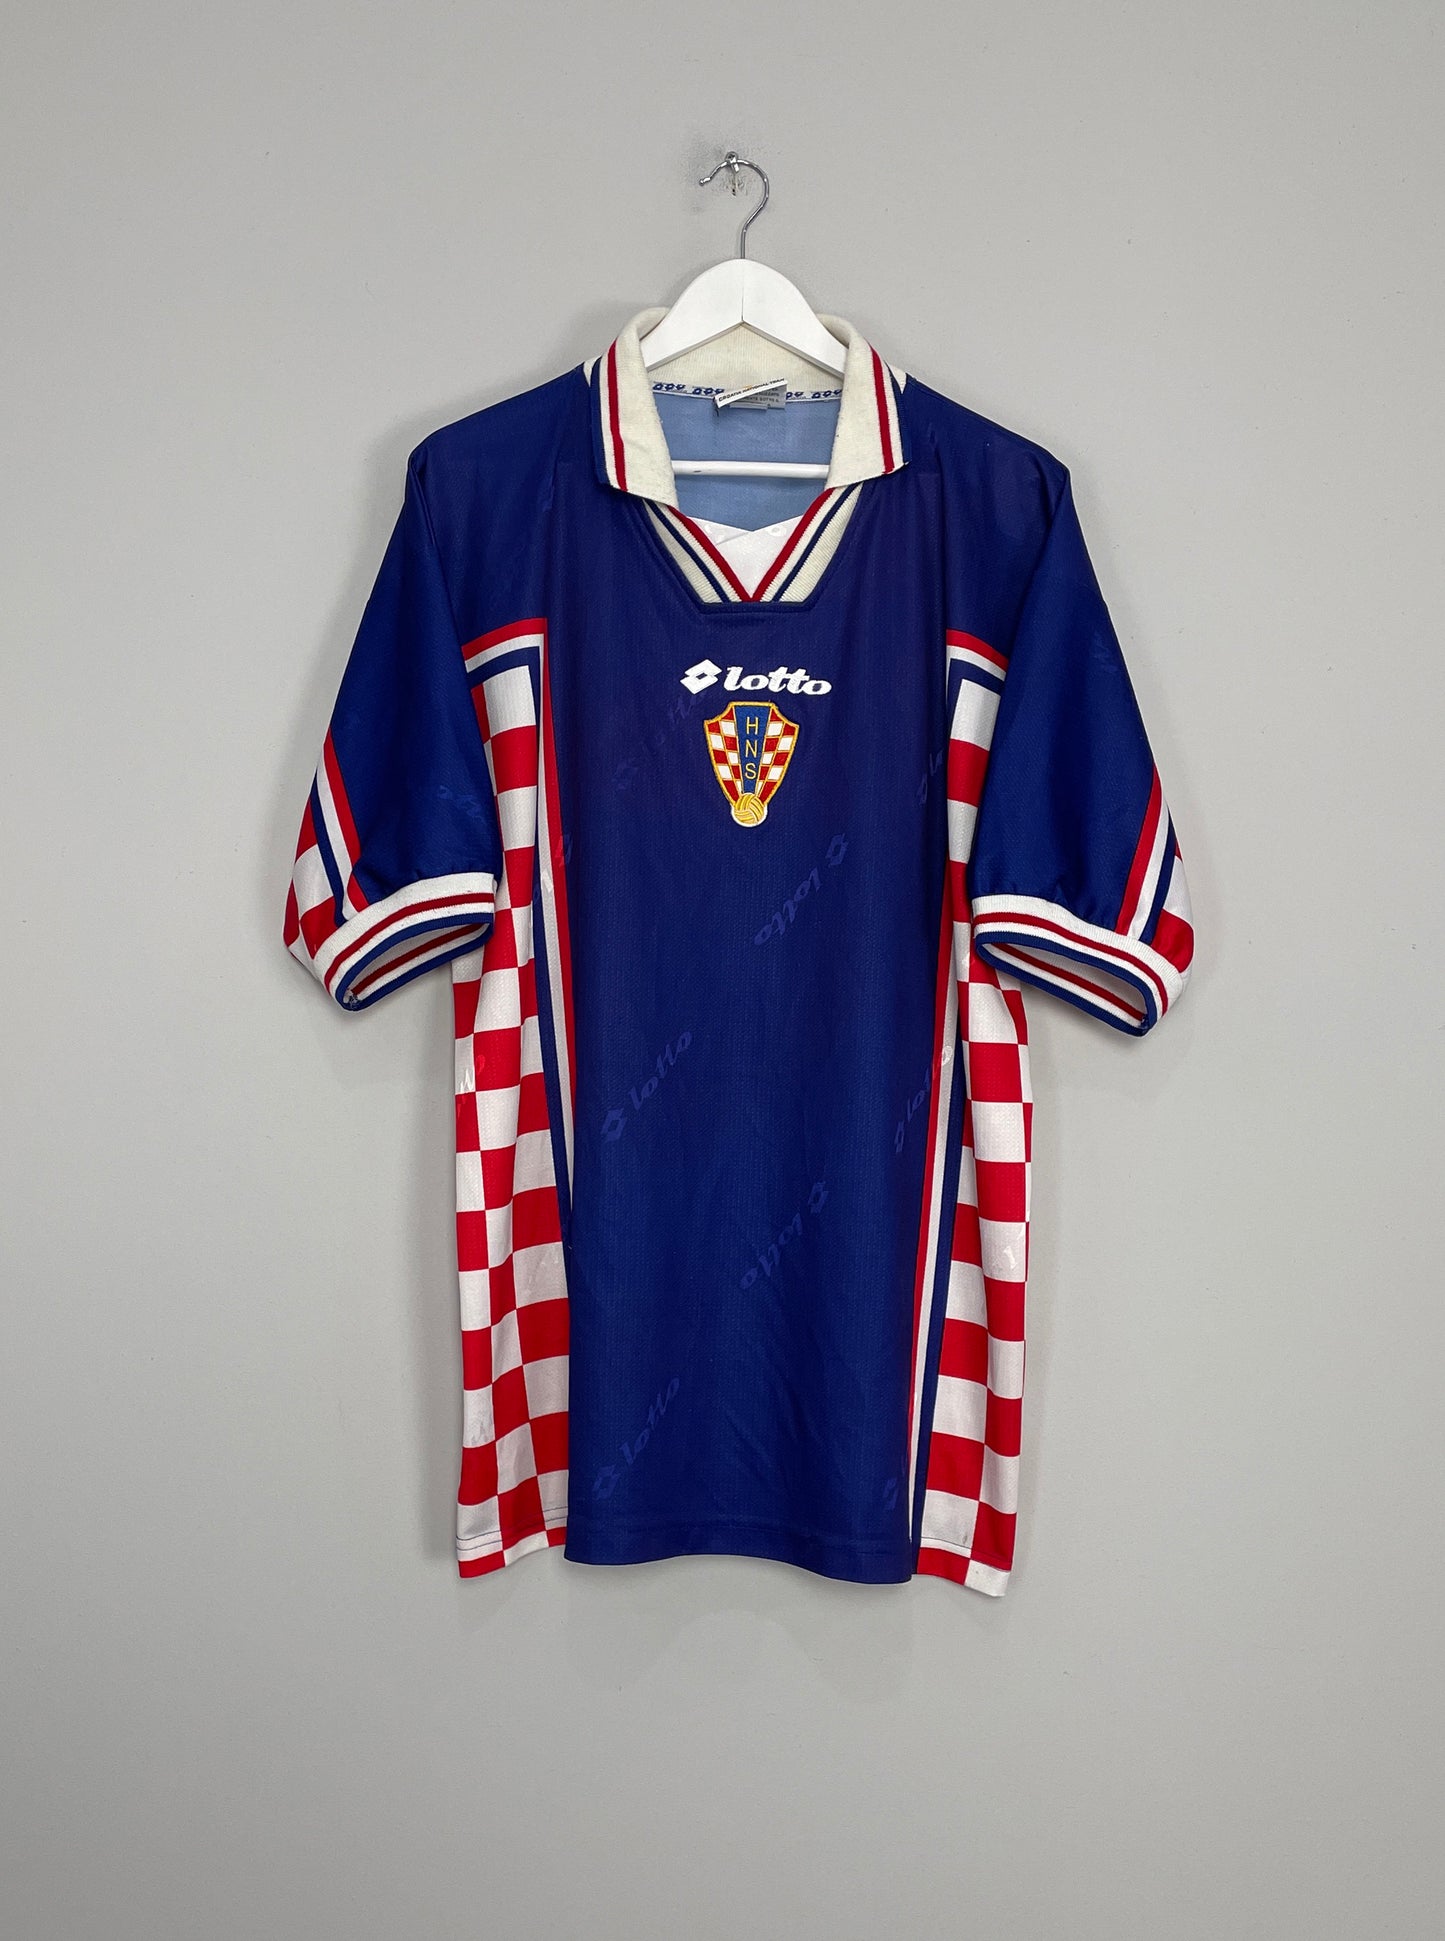 Image of the Croatia shirt from the 1998/01 season